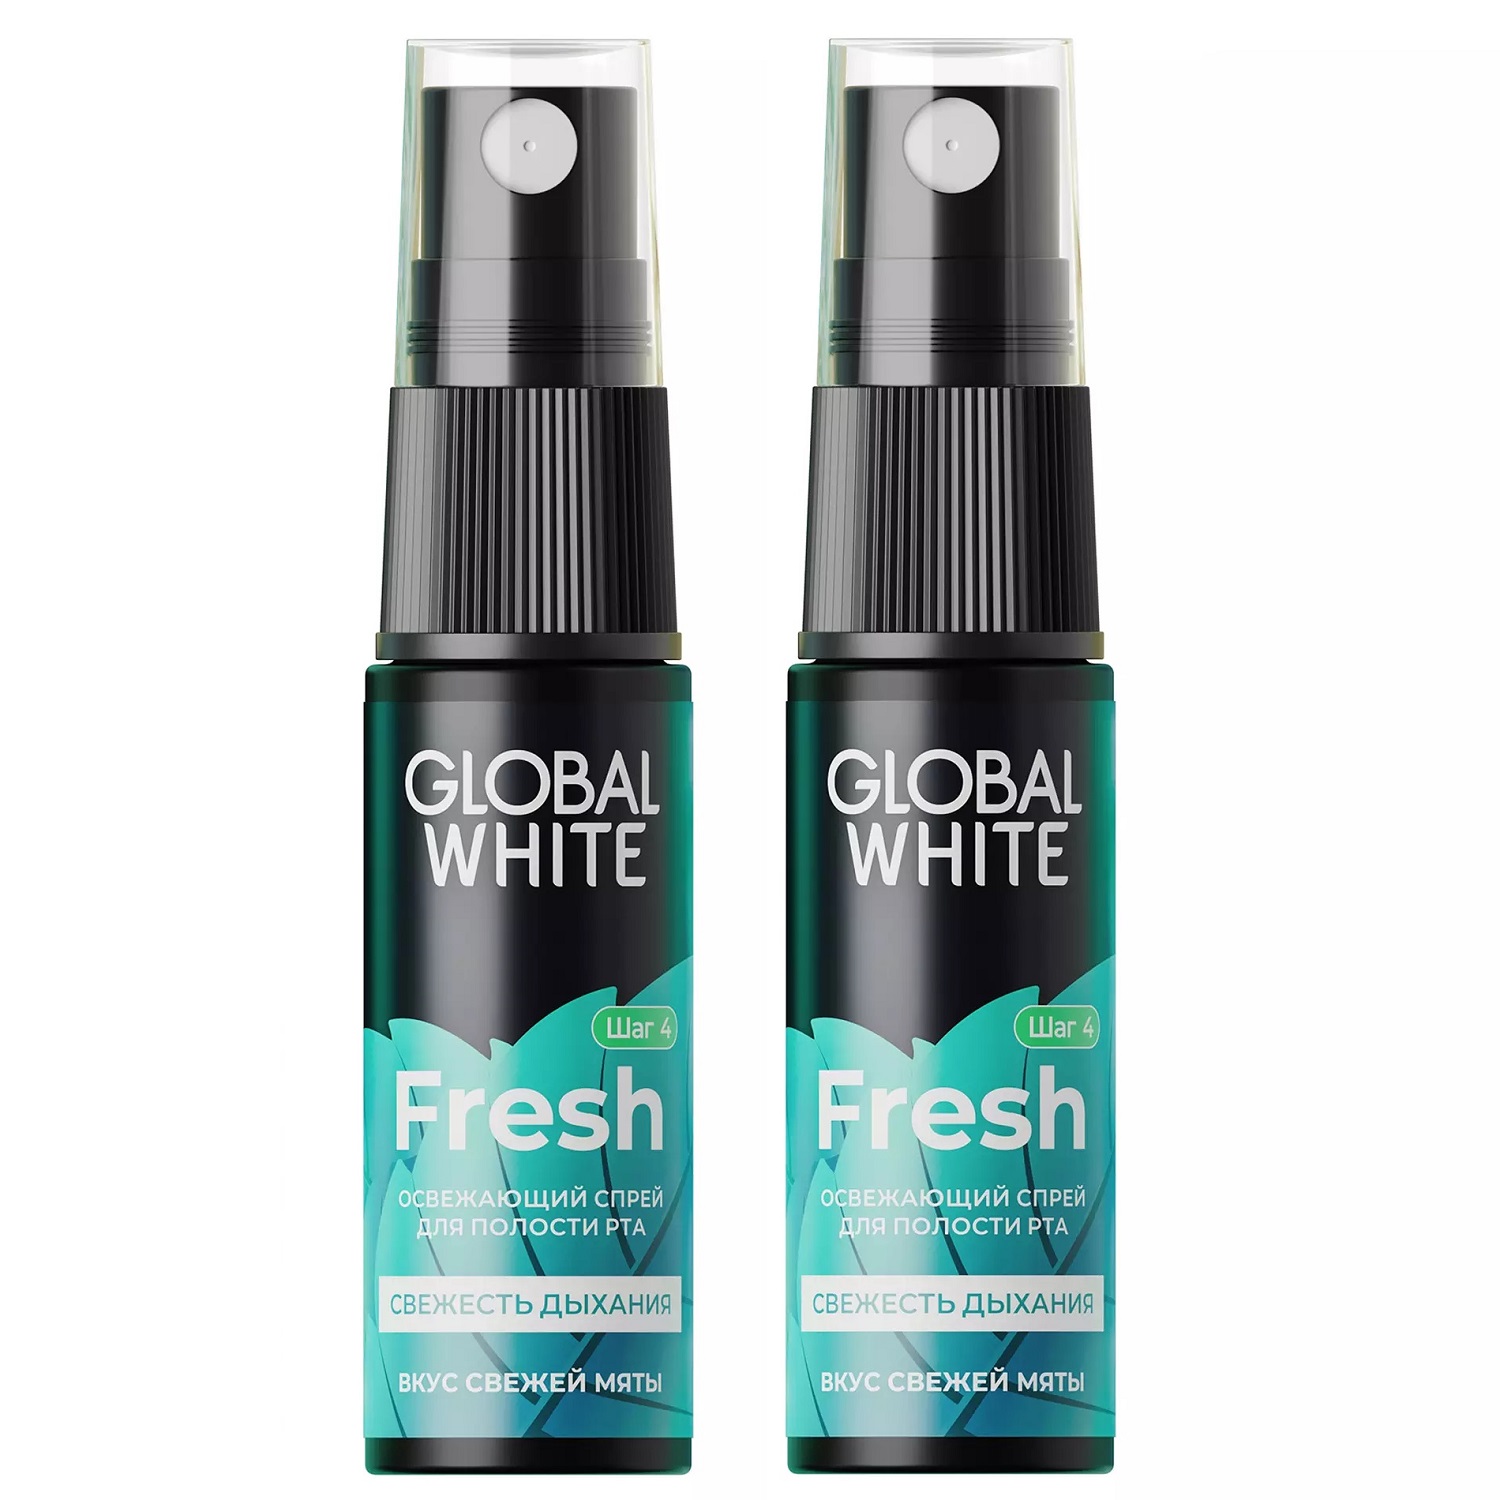 Global White Набор: освежающий спрей для полости рта «Свежее дыхание», 2 х 15 мл (Global White, Поддержание эффекта отбеливания) освежающий спрей для полости рта лимон